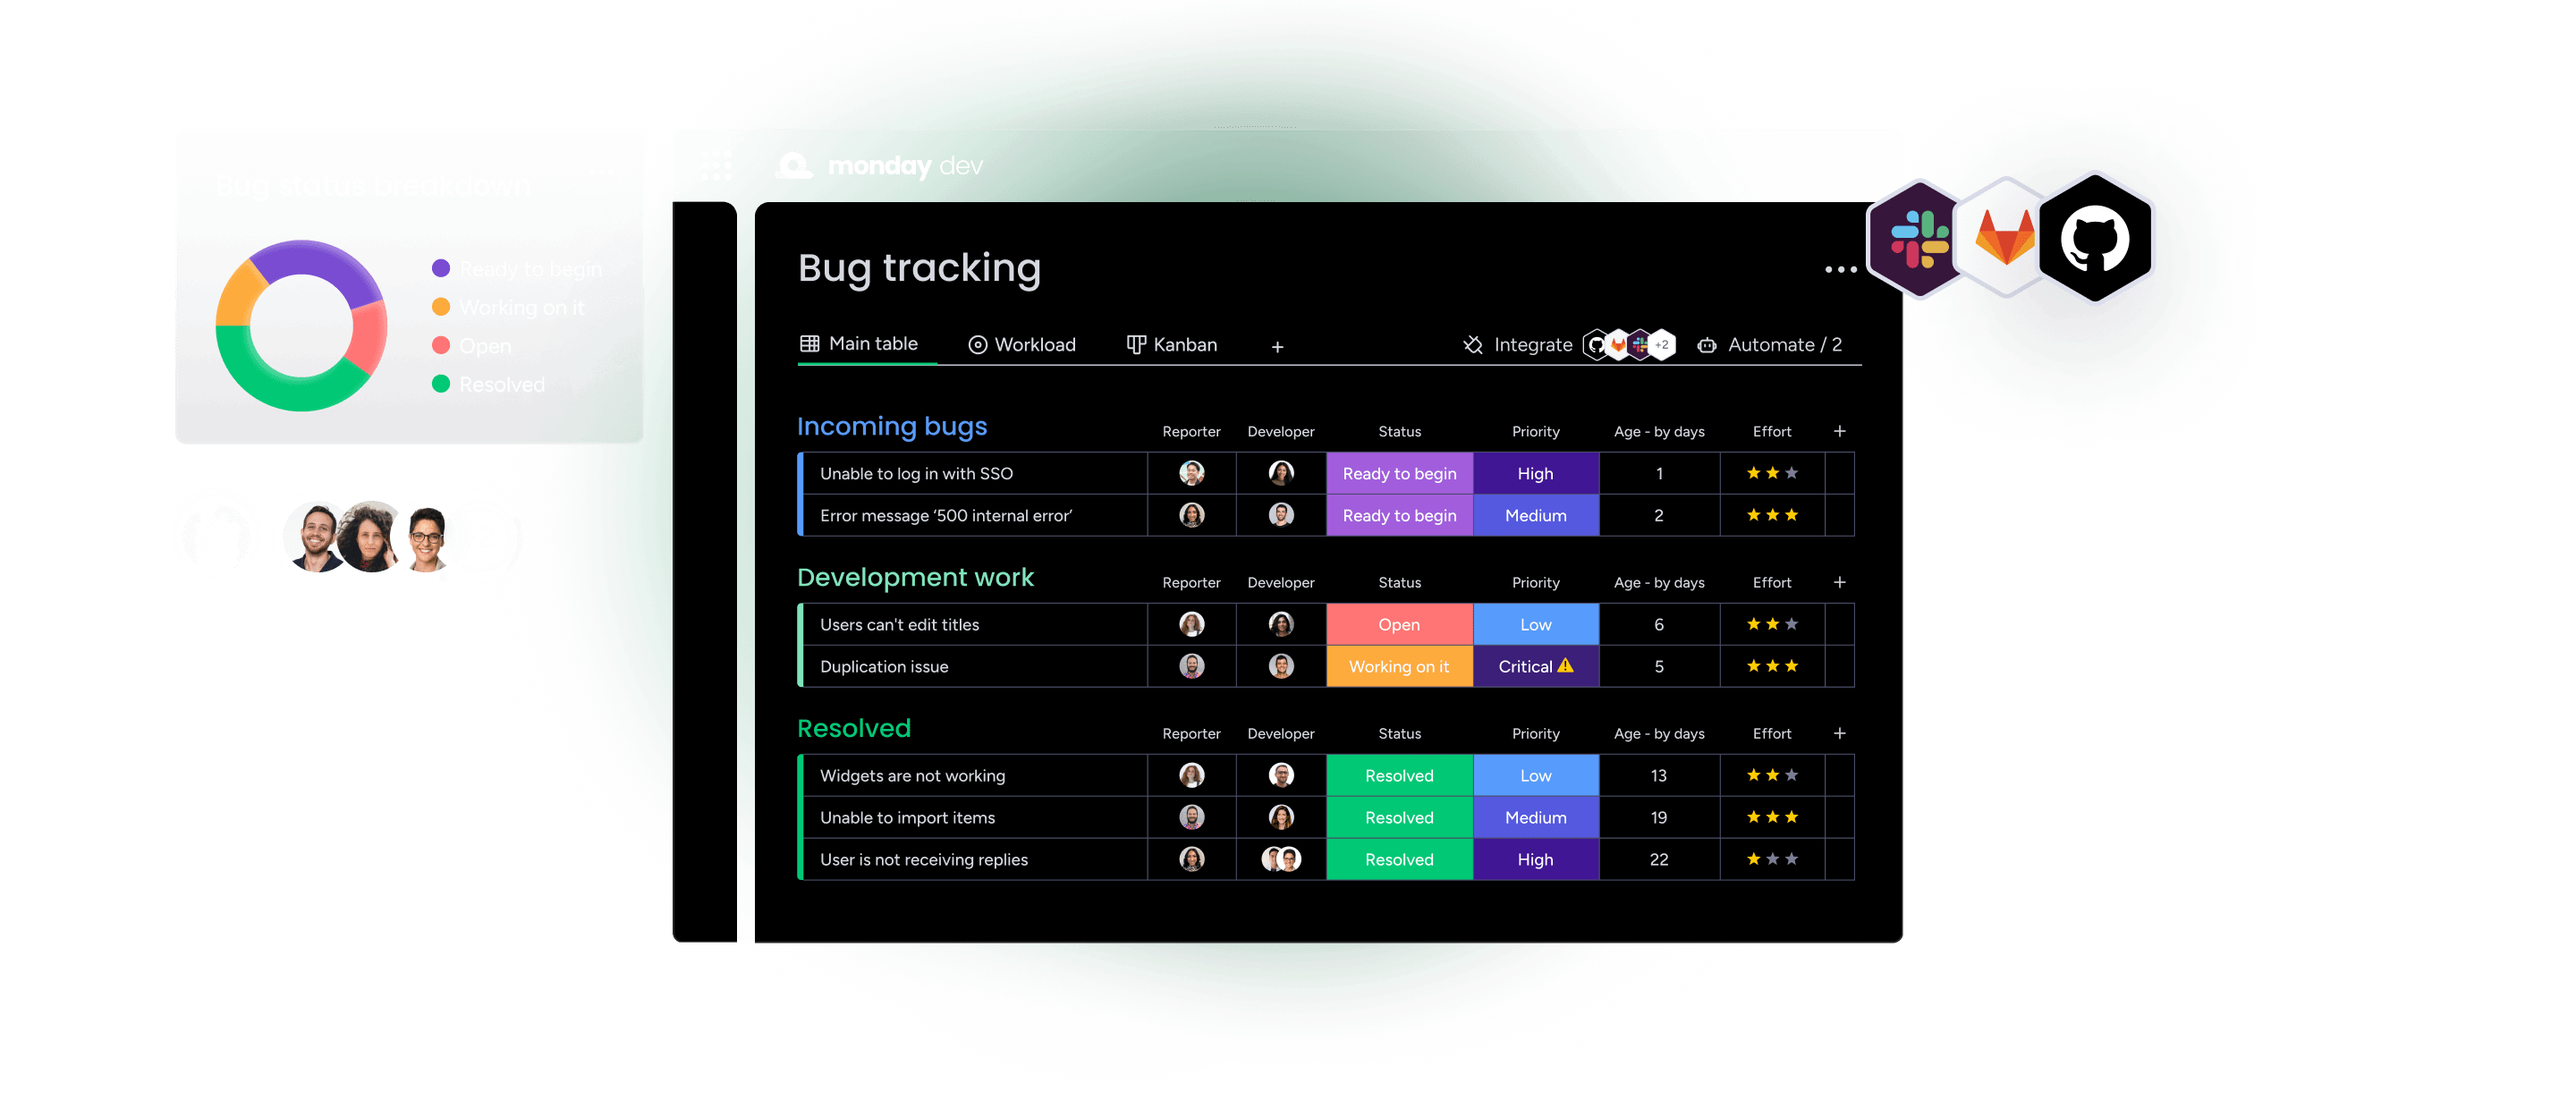 2Bug tracking